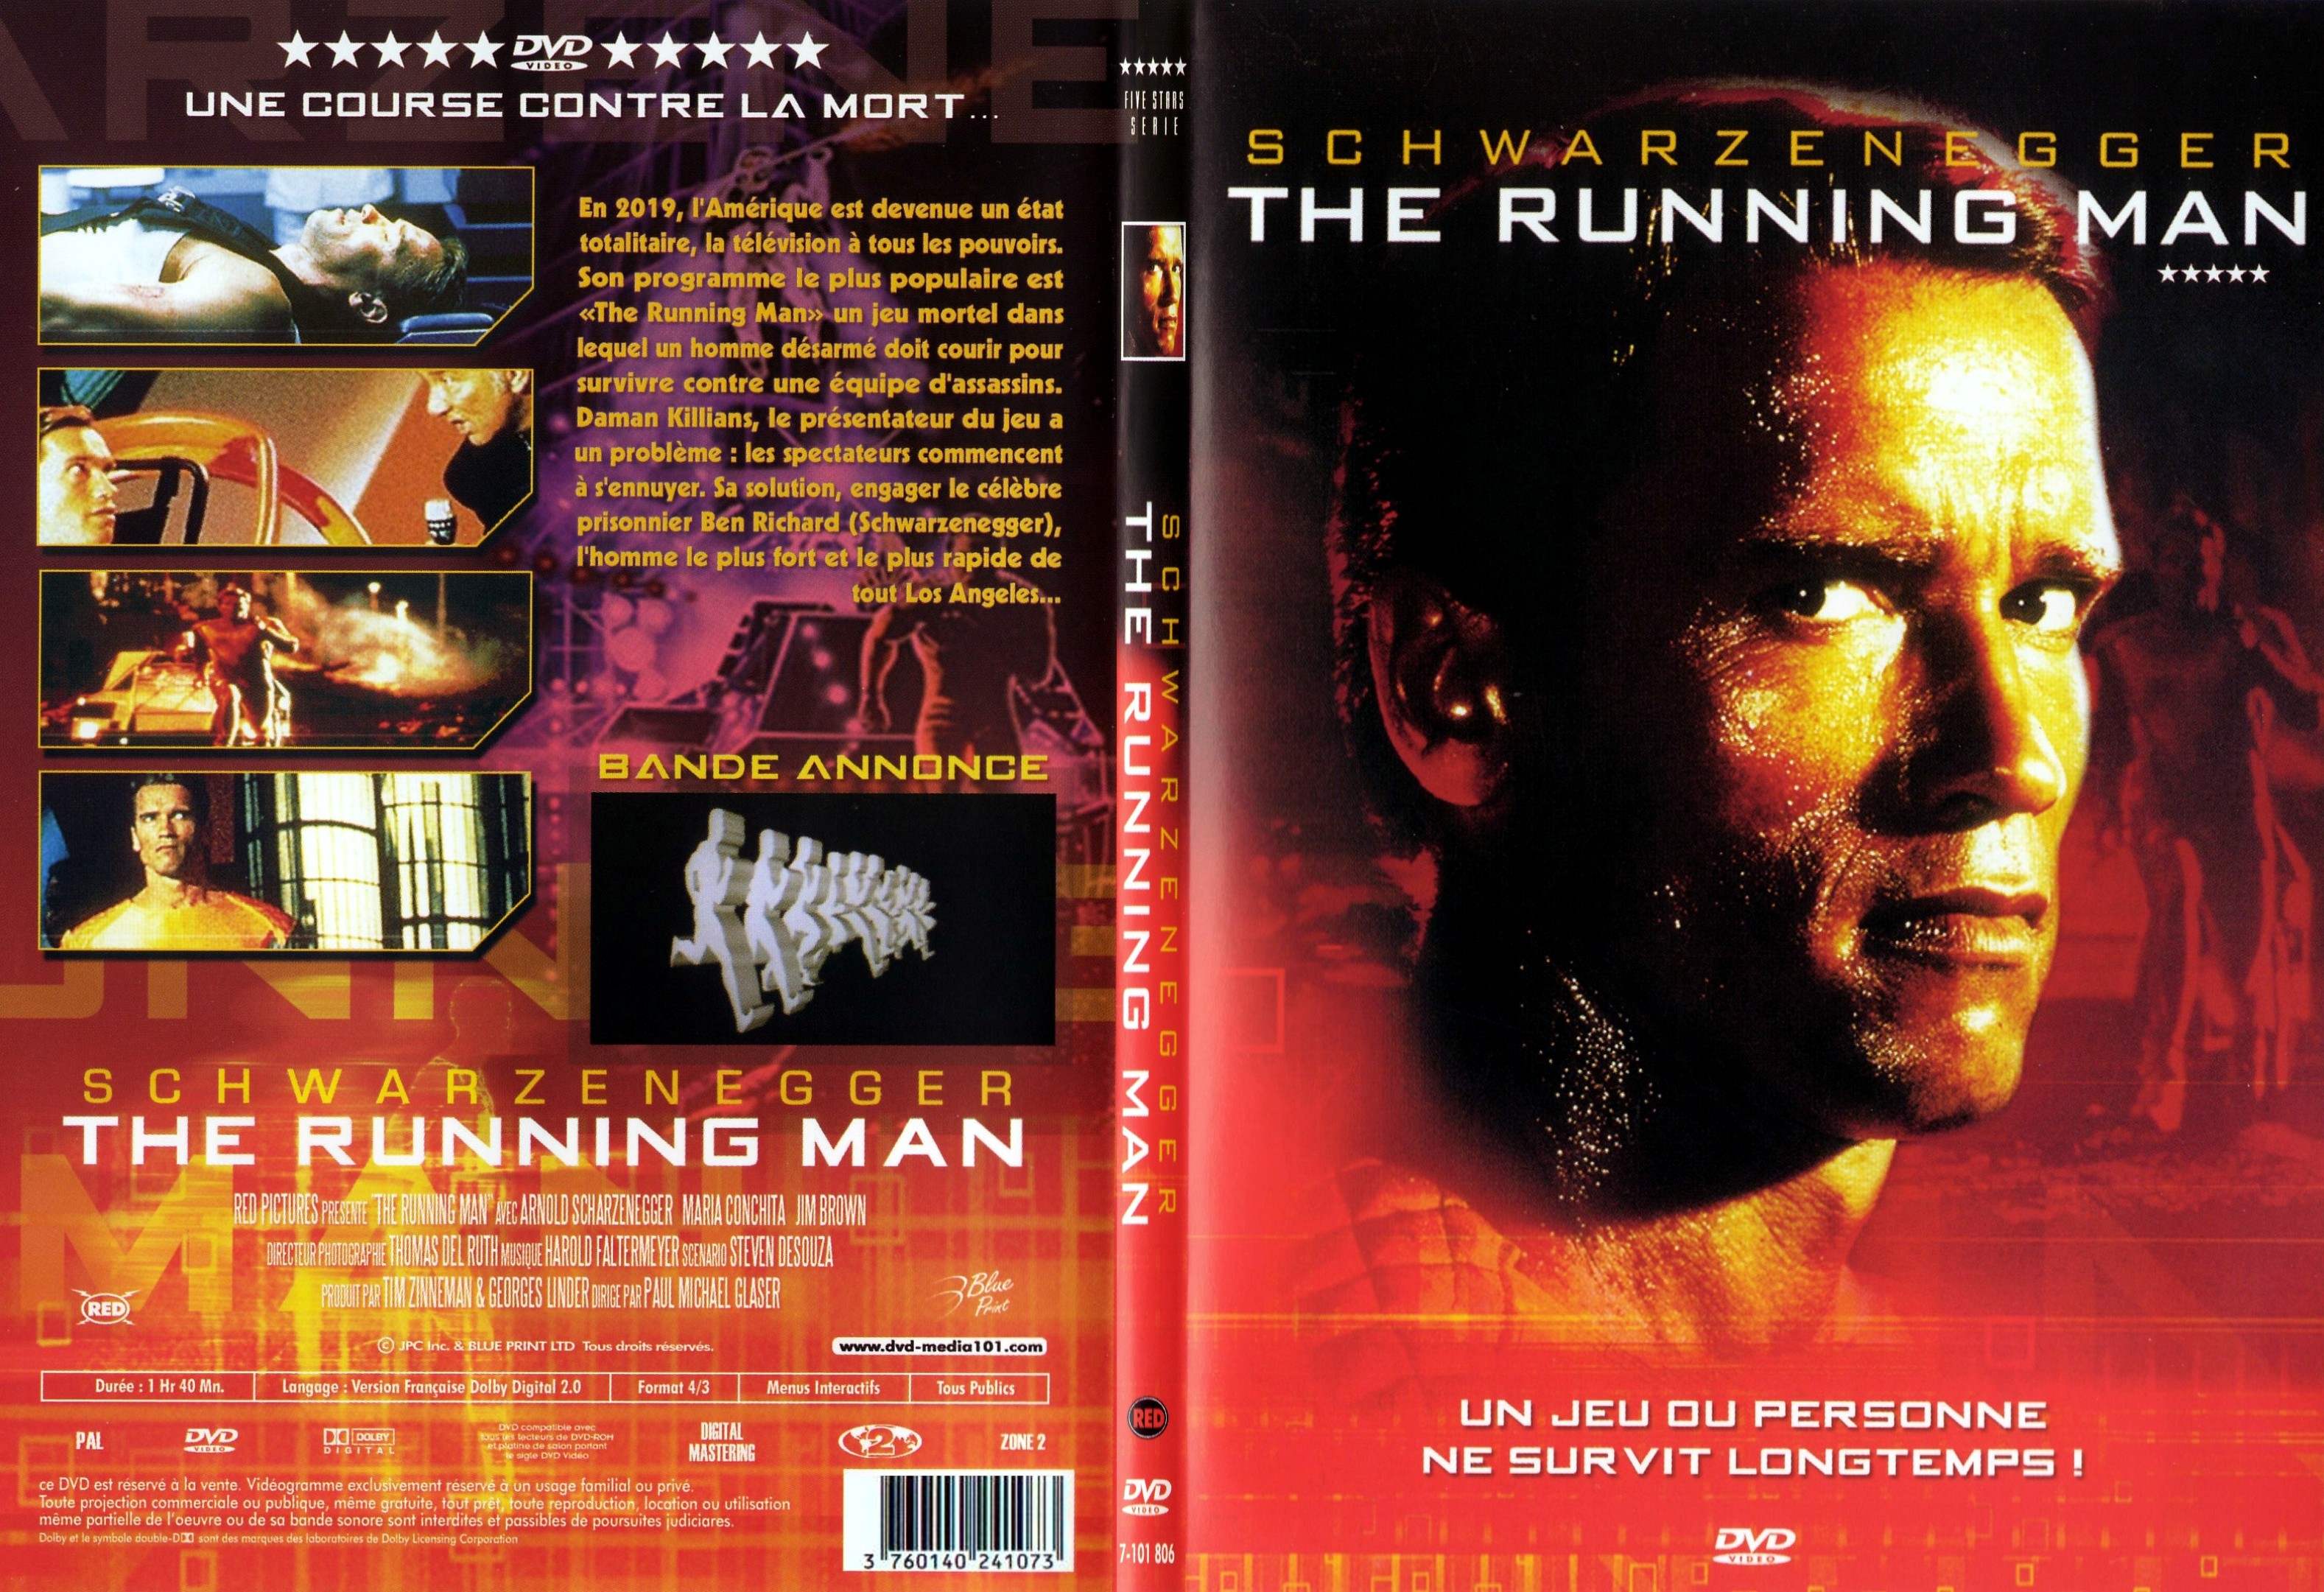 Jaquette DVD The running man - SLIM